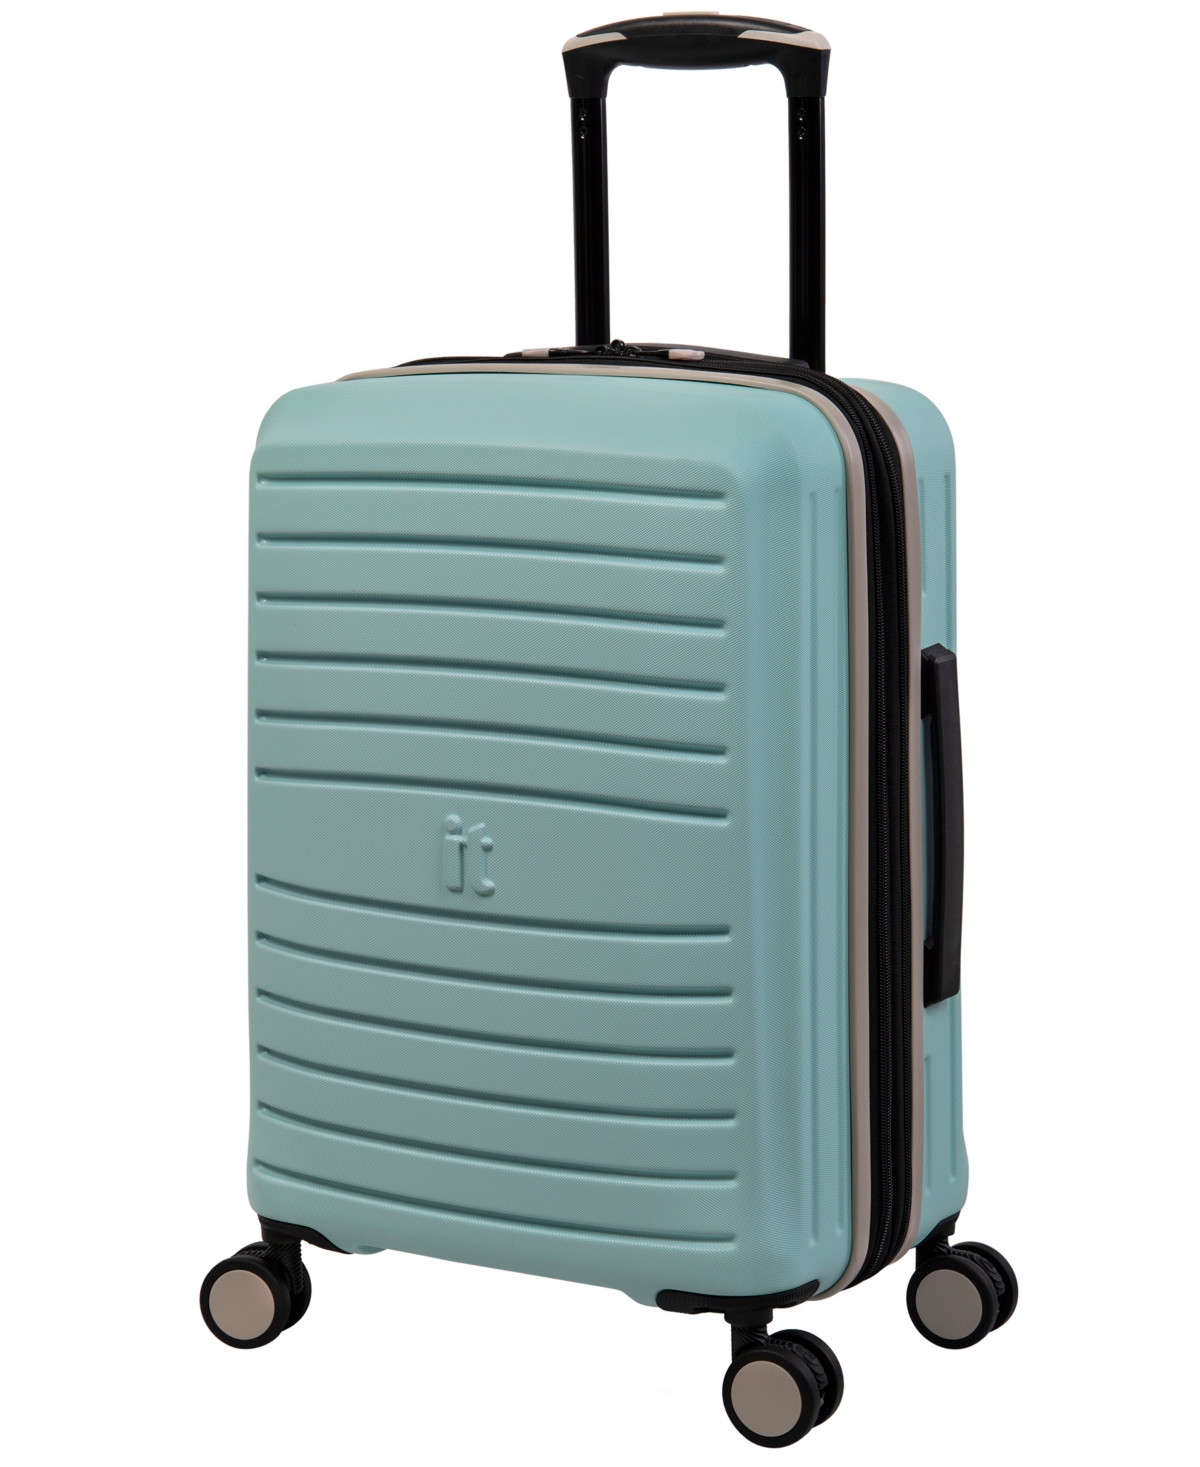 It Intrepid Luggage | ModeSens